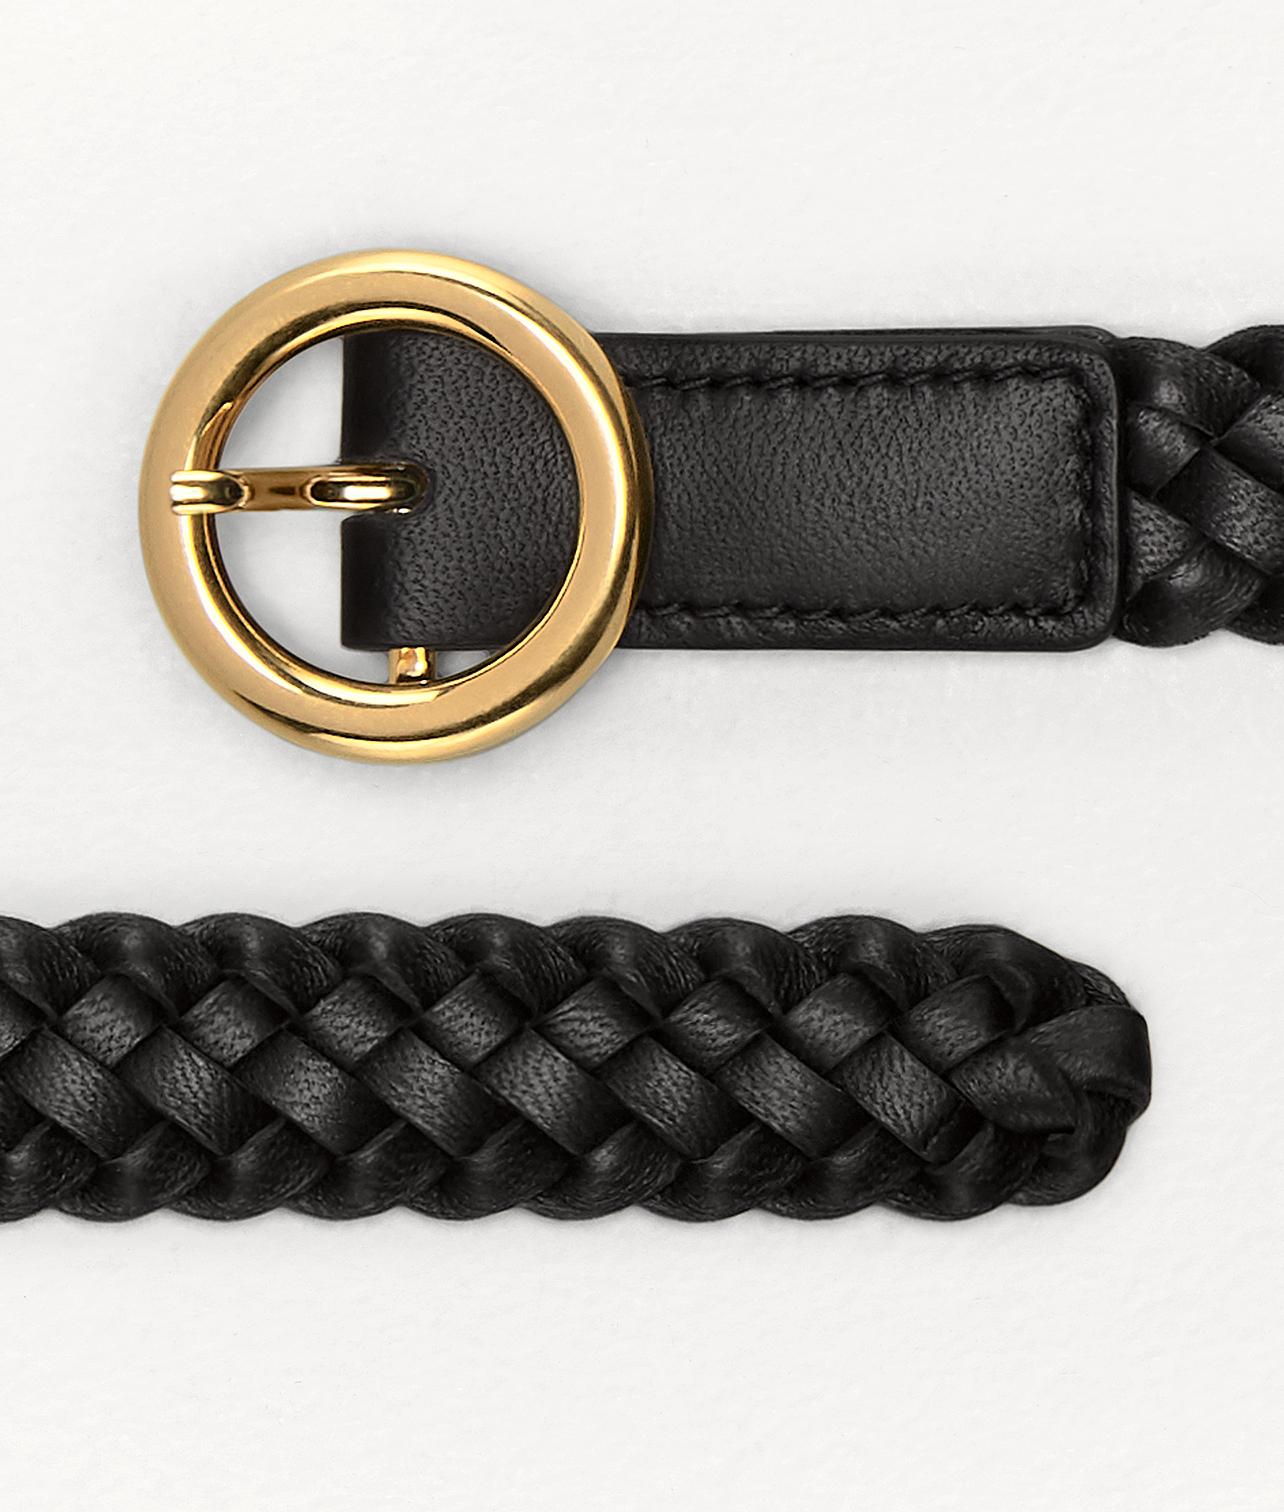 Bottega Veneta Leather Belt in Nero (Black) - Lyst